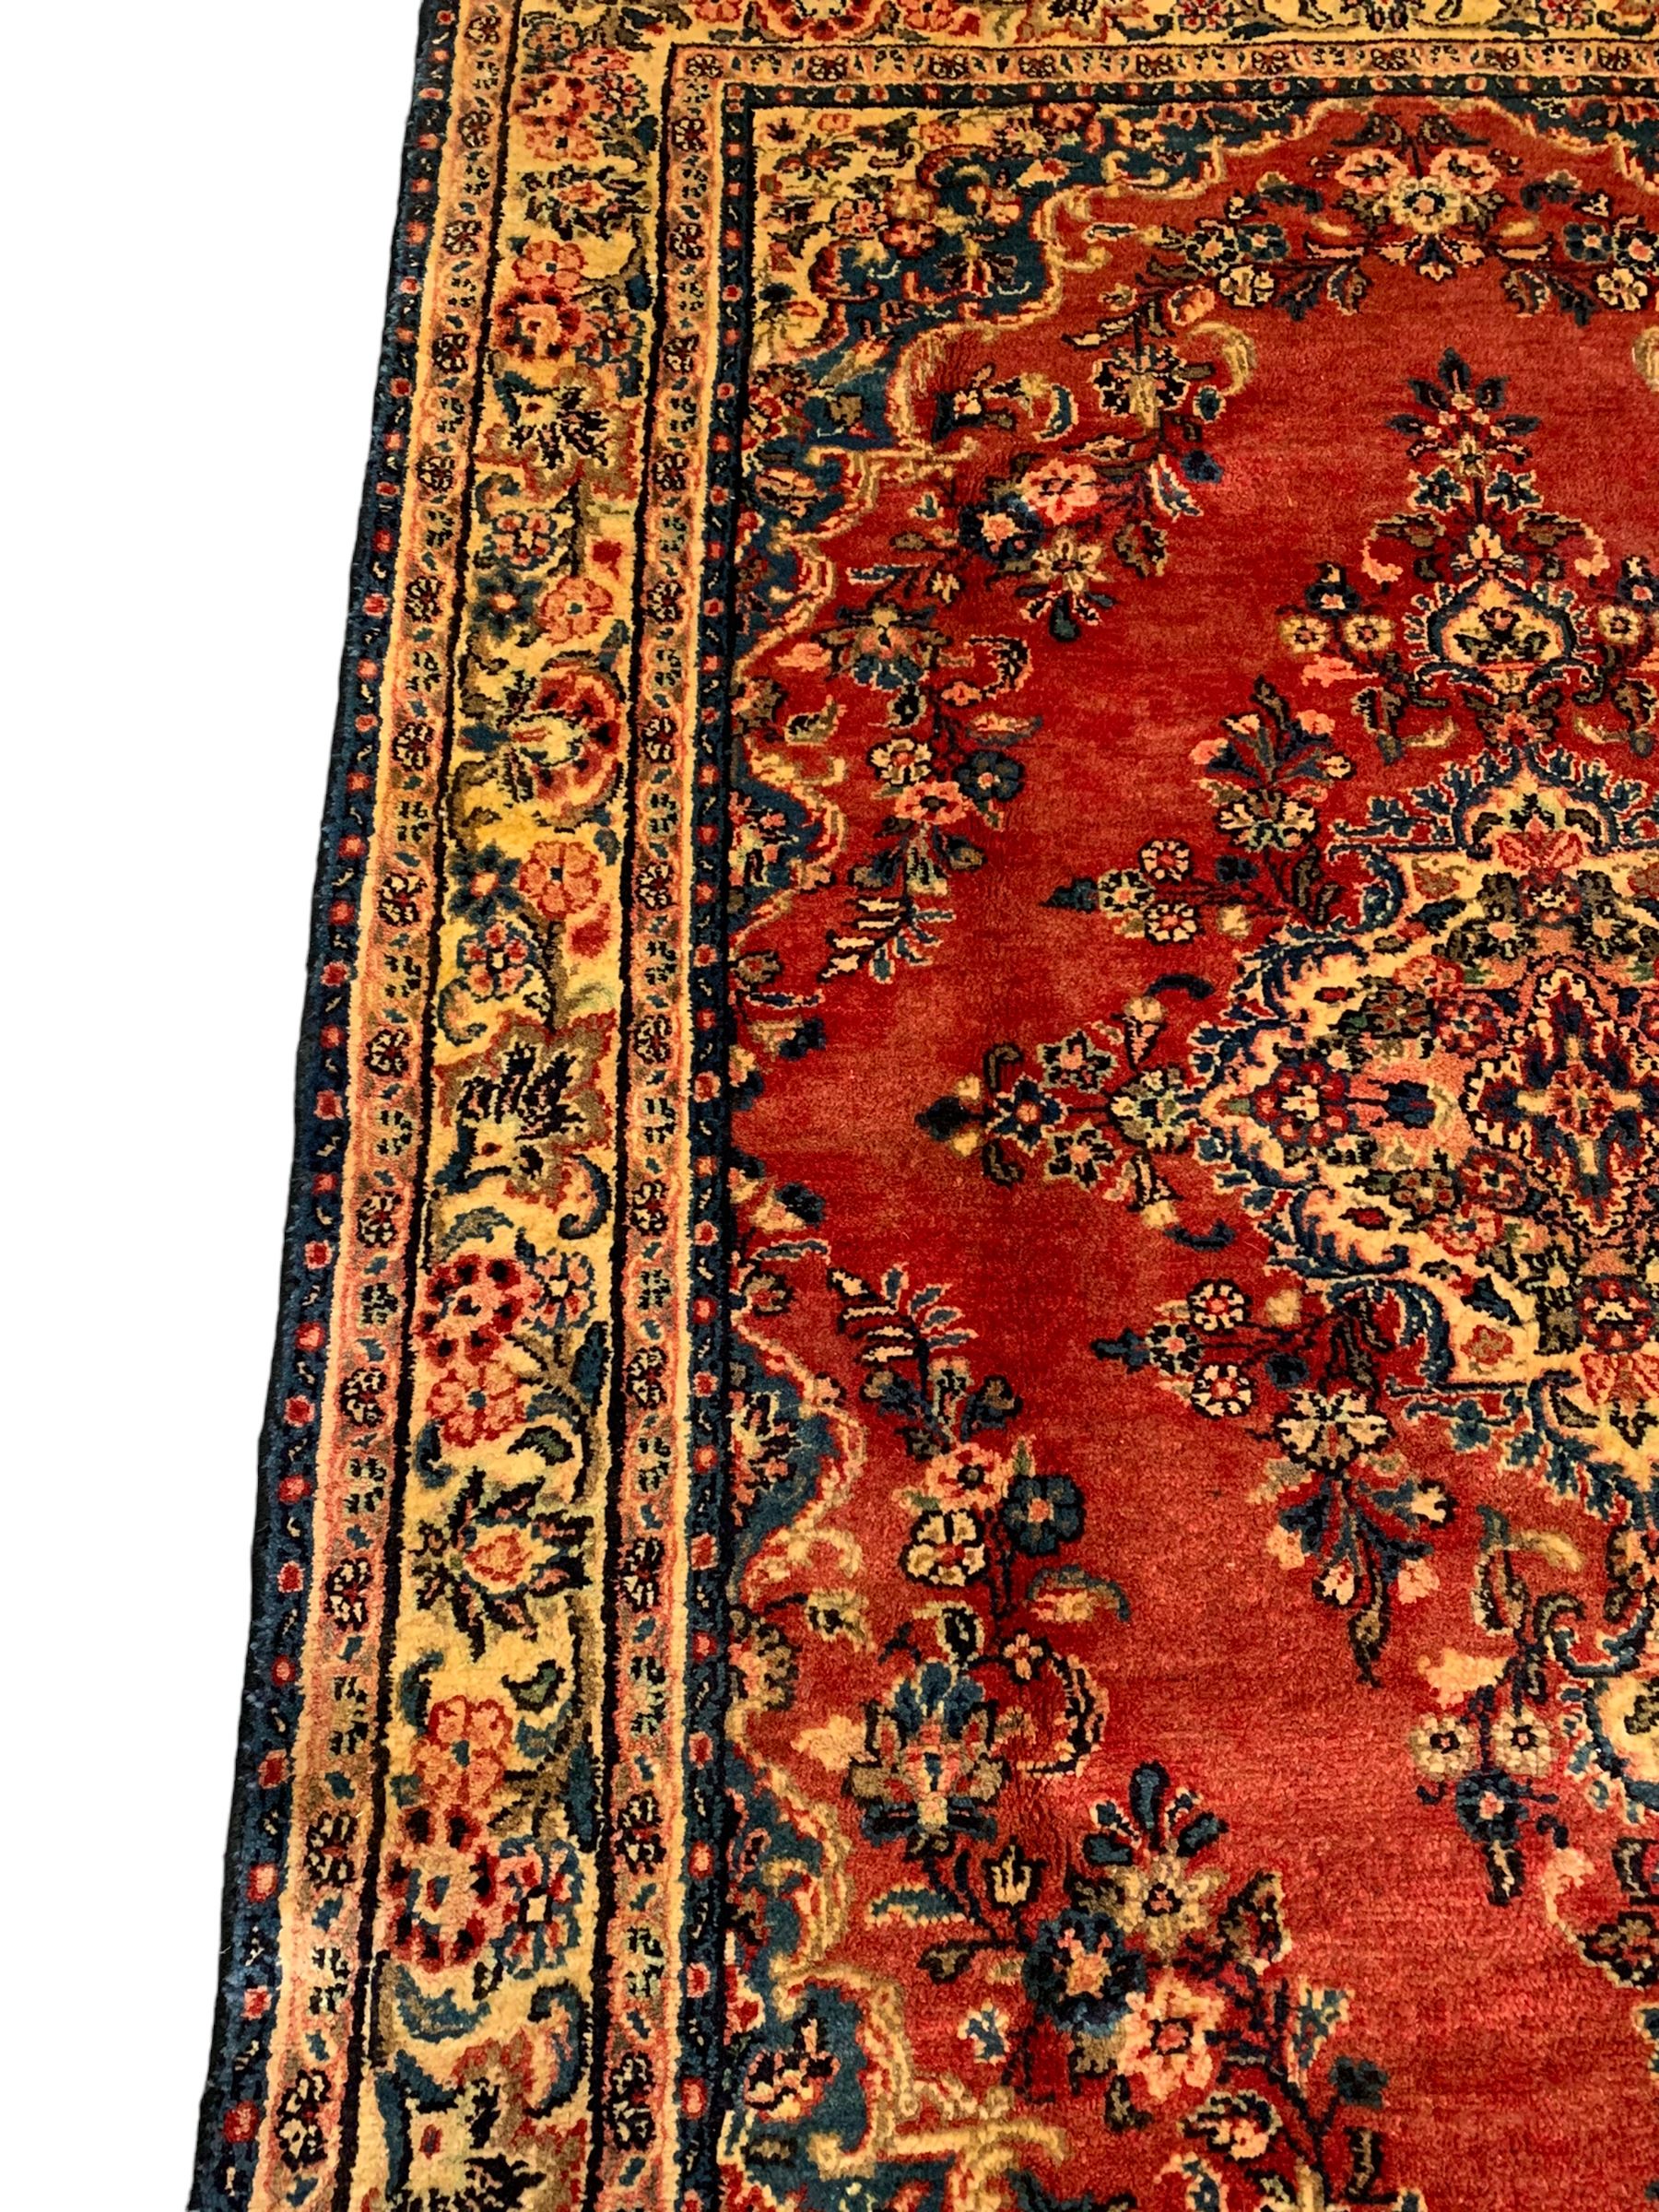 Persian crimson ground rug - Image 3 of 8